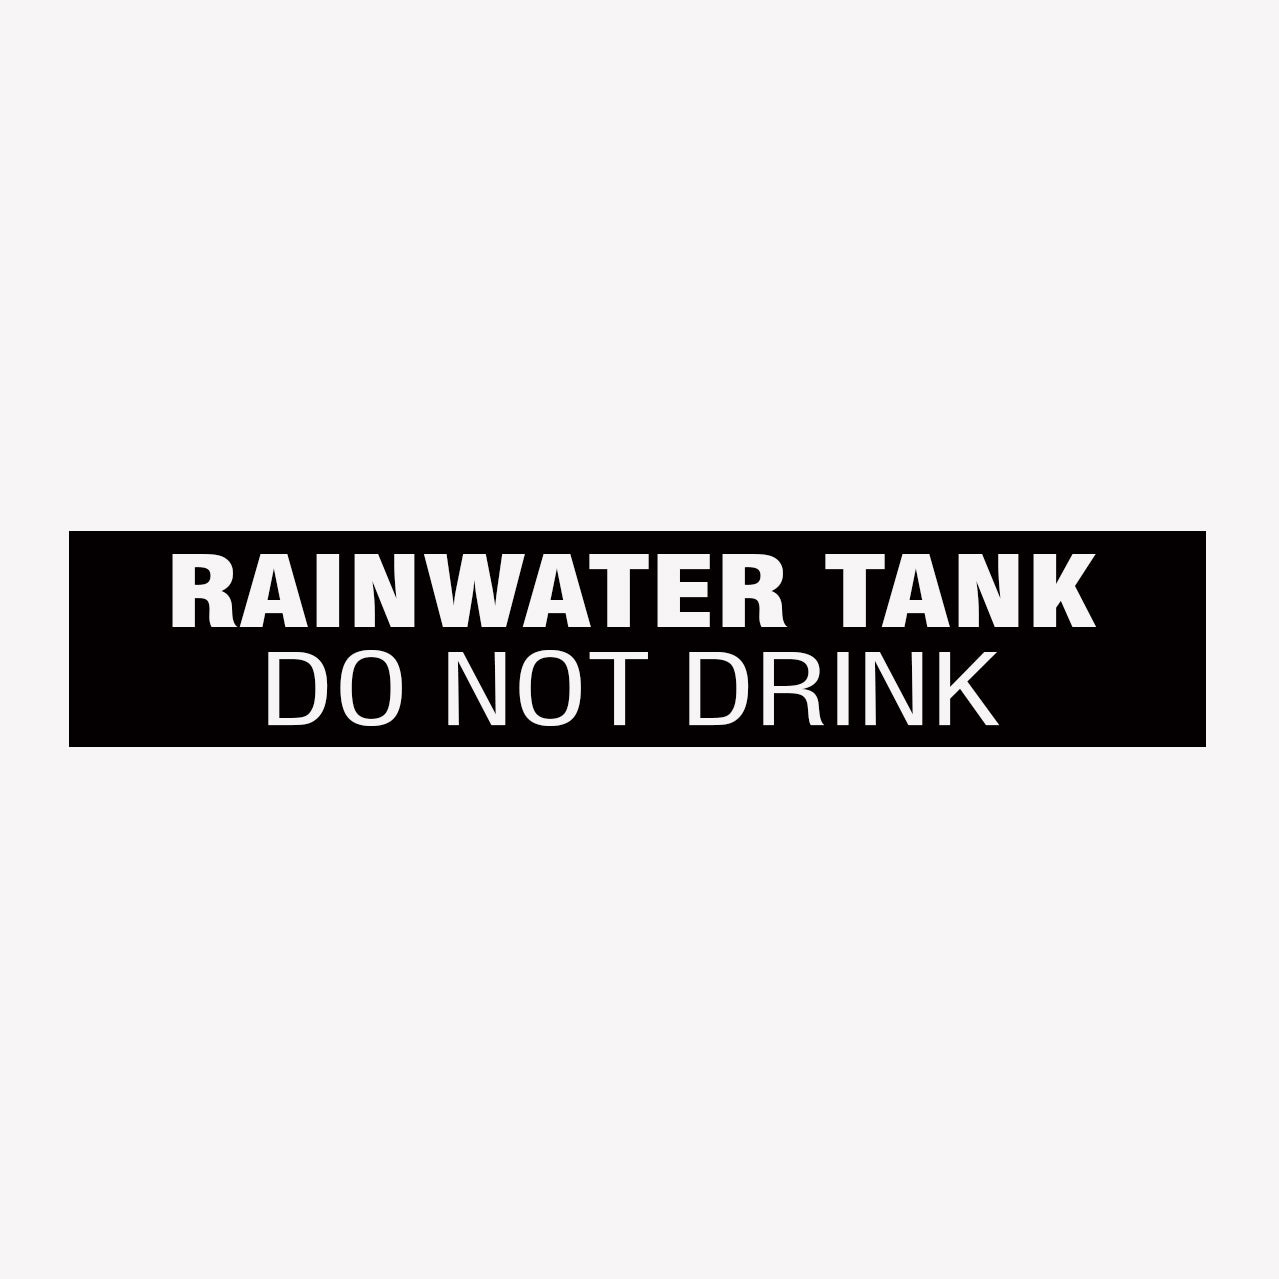 RAINWATER TANK DO NOT DRINK SIGN